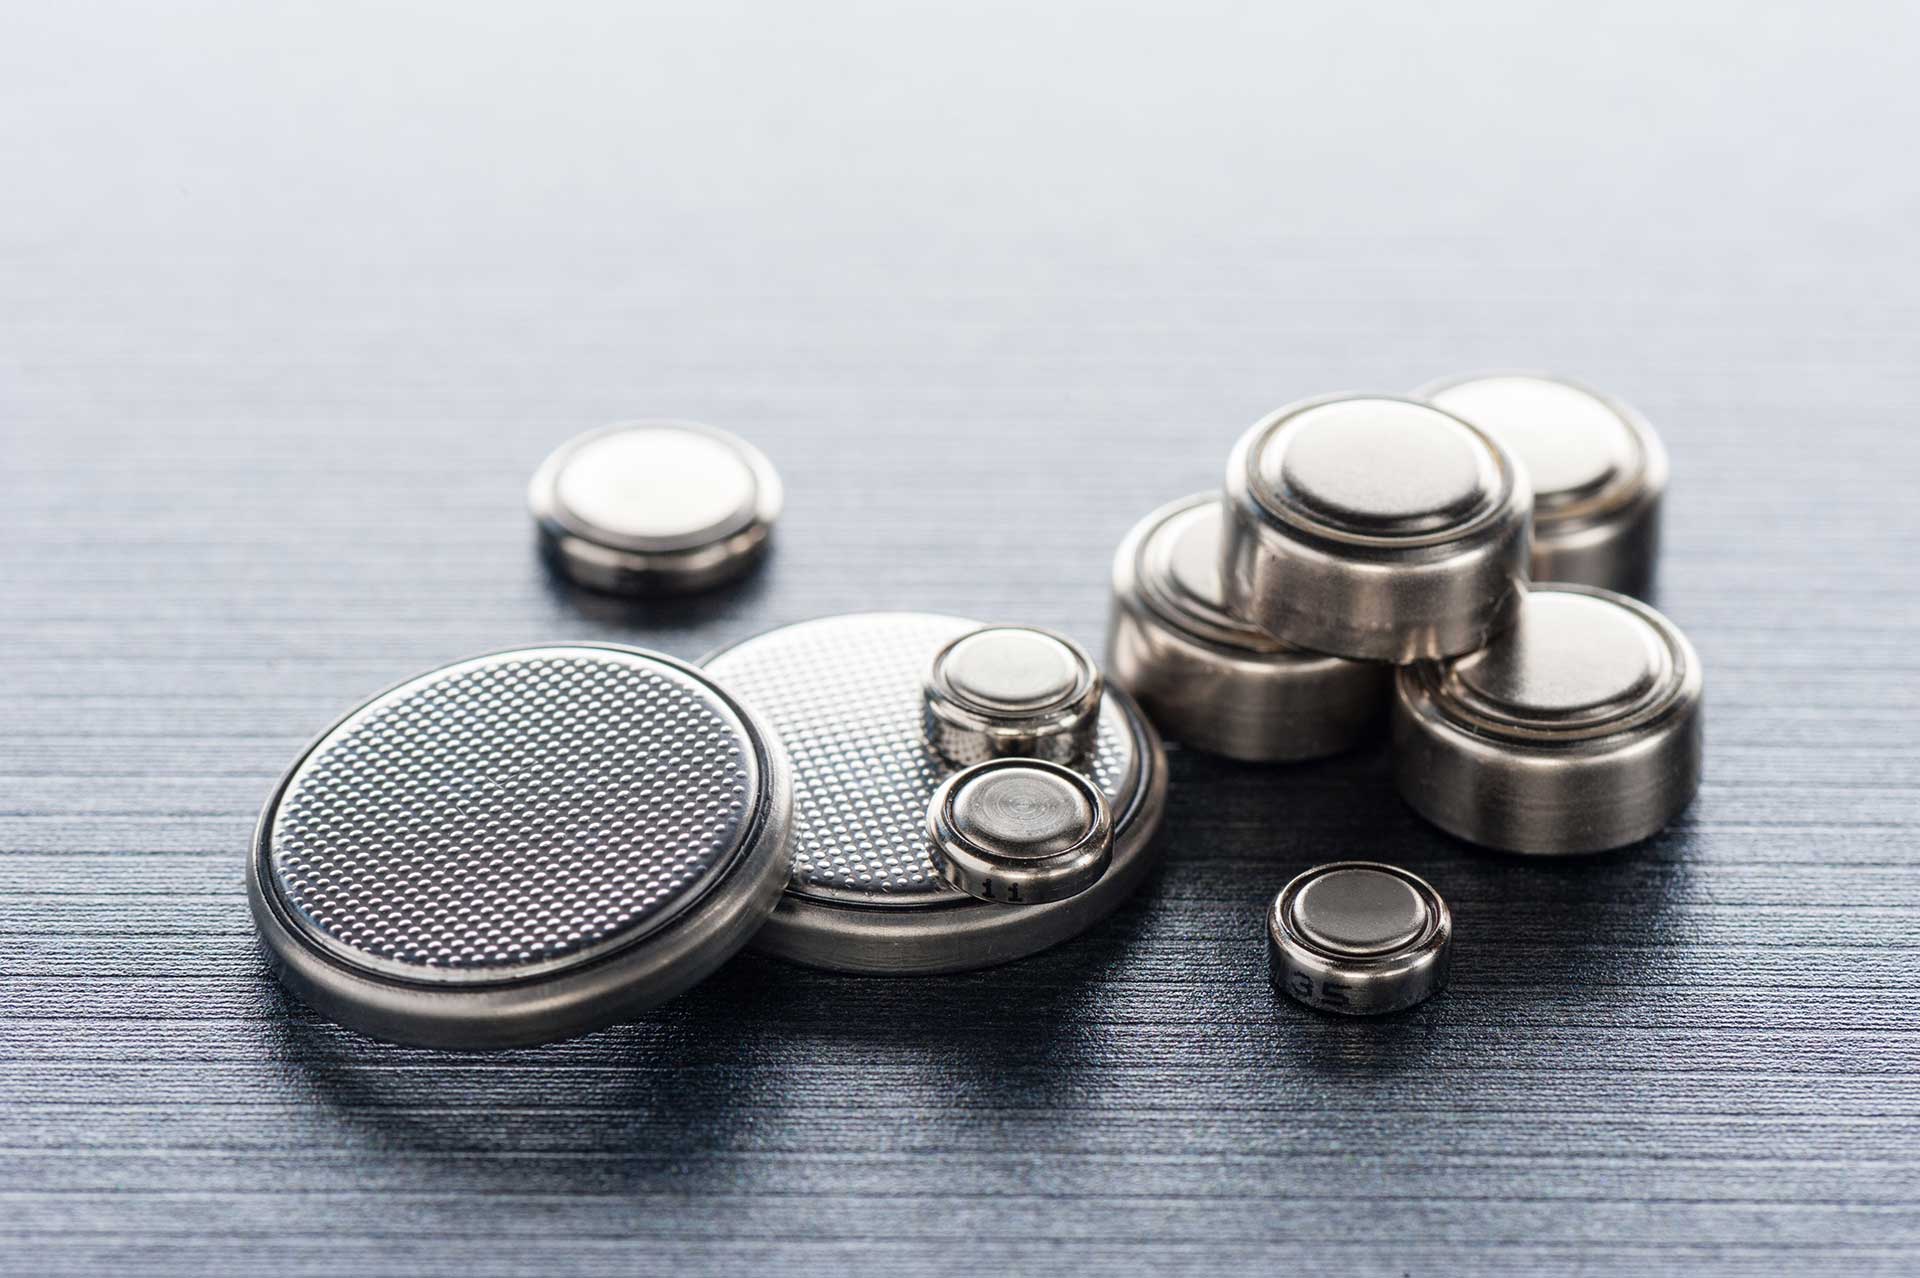 Coin / Button Batteries